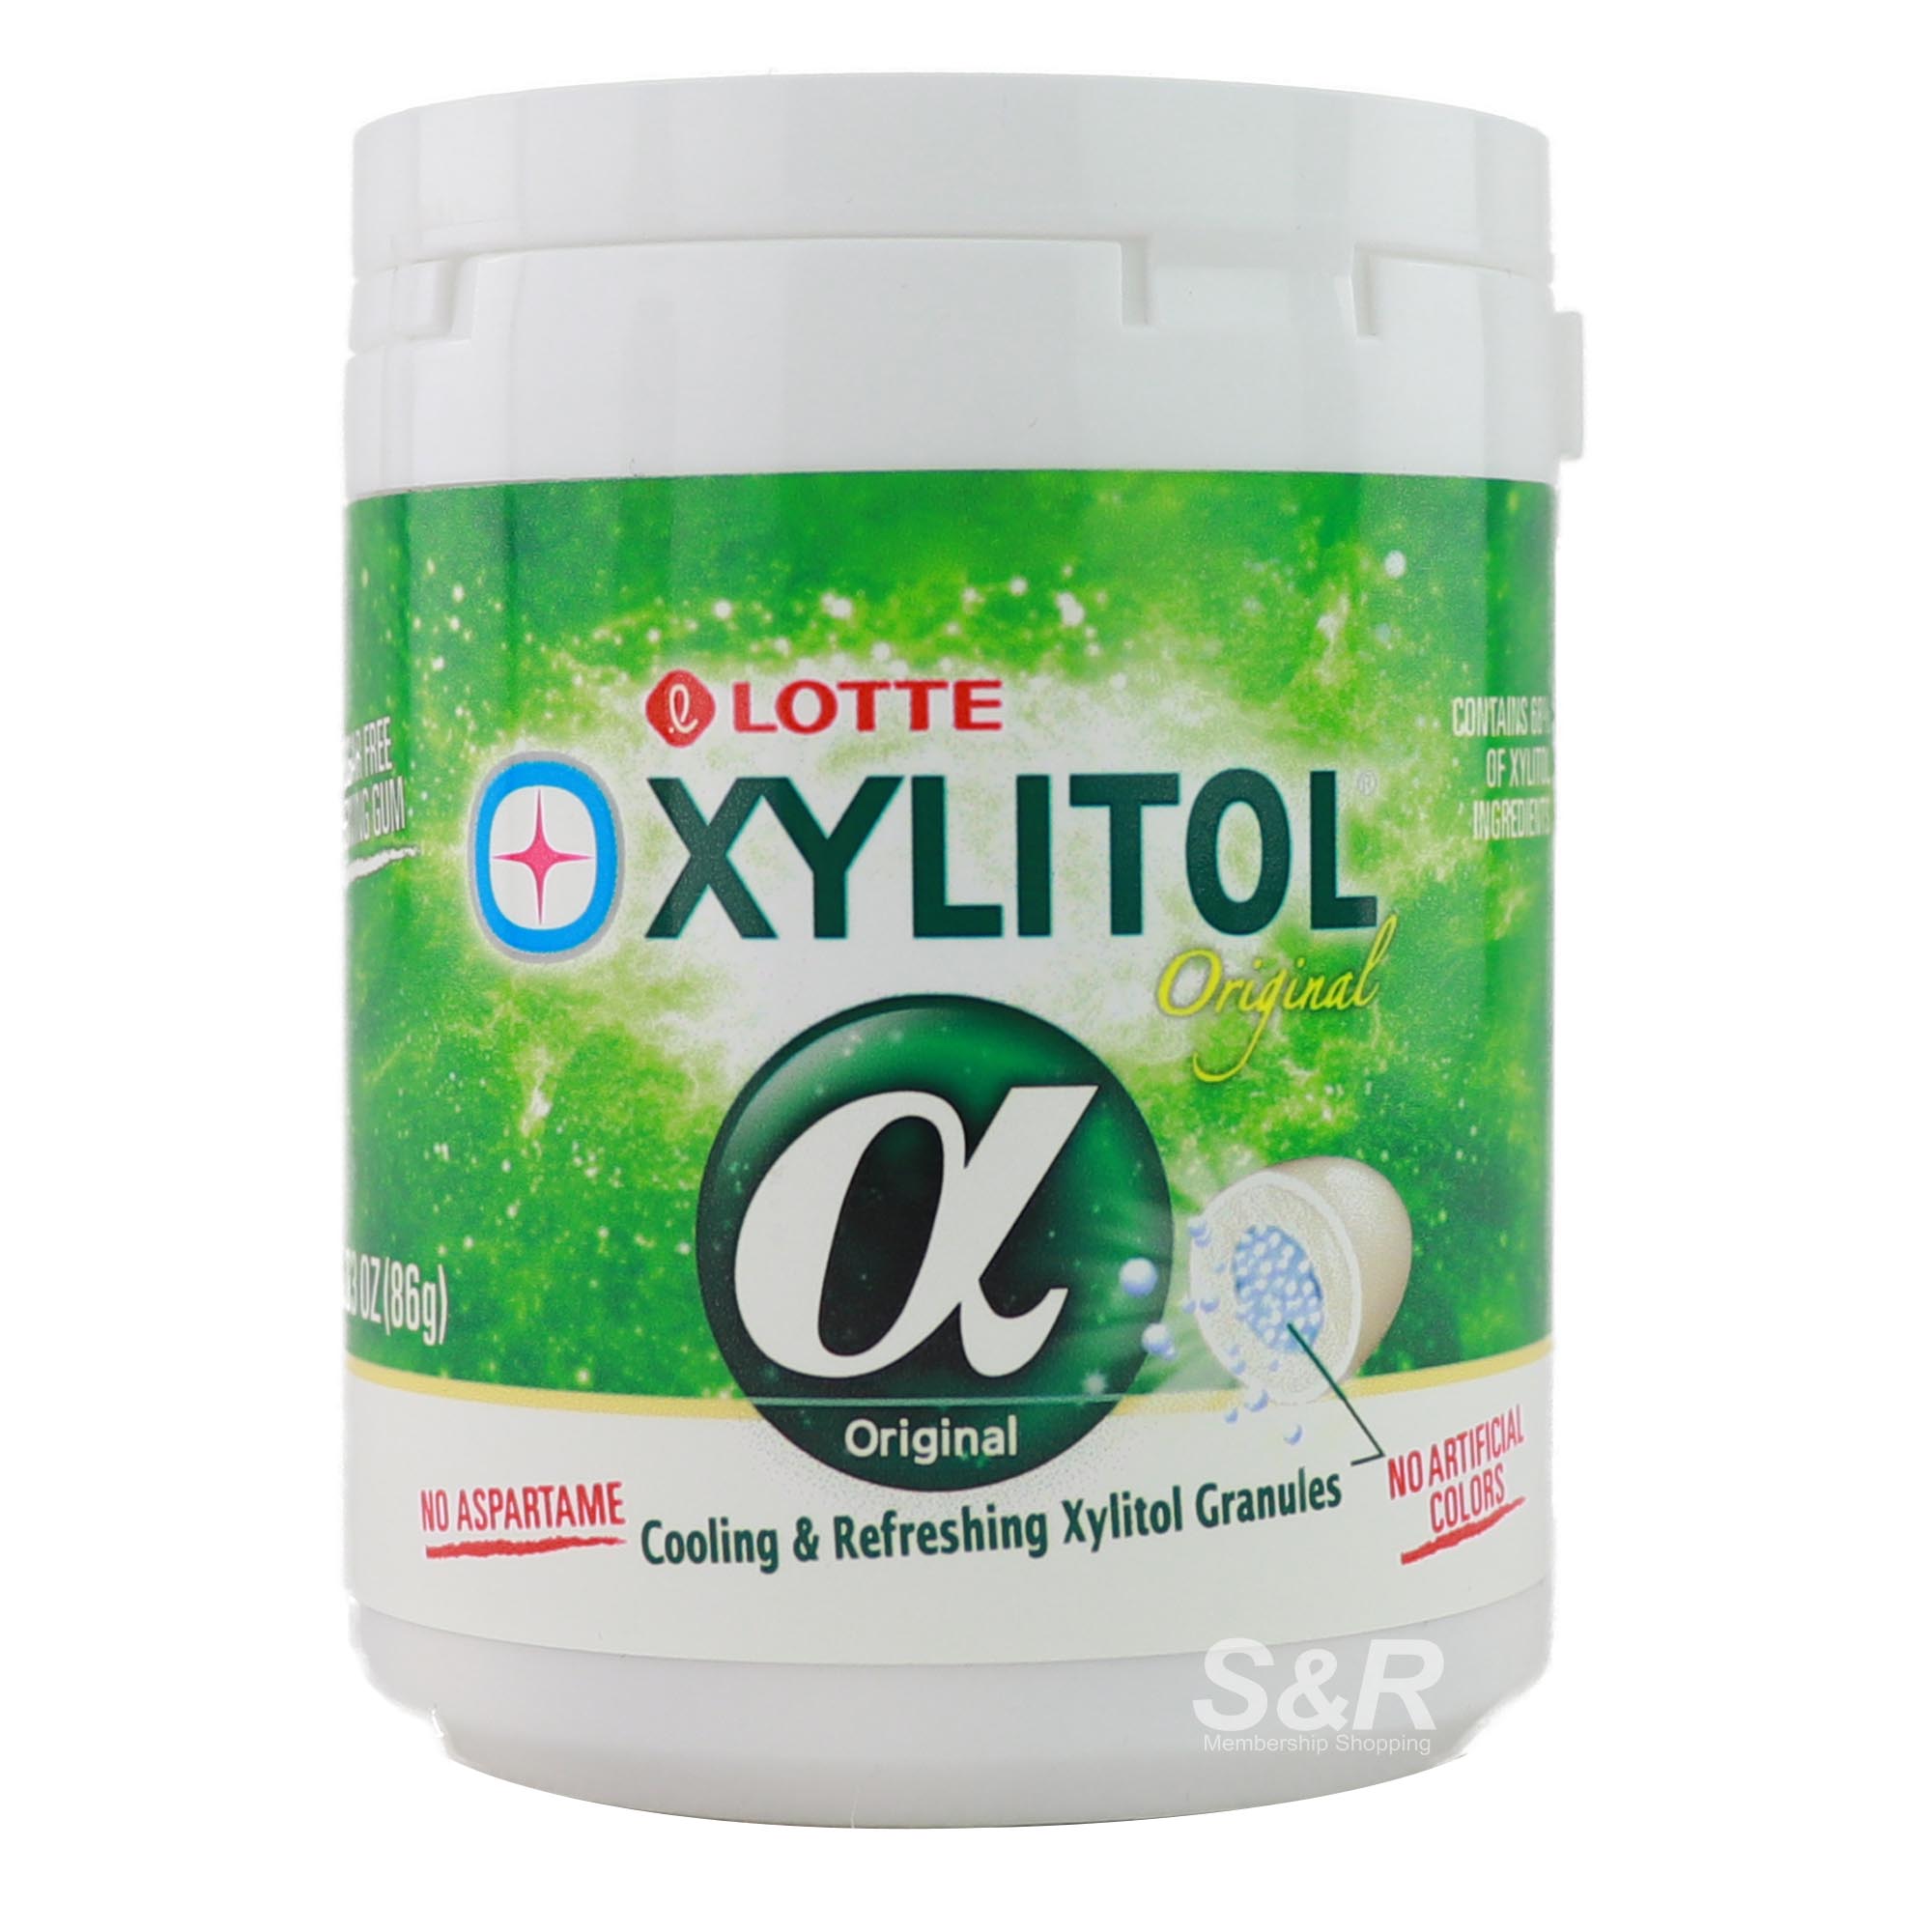 Lotte Xylitol Gum Original 86g